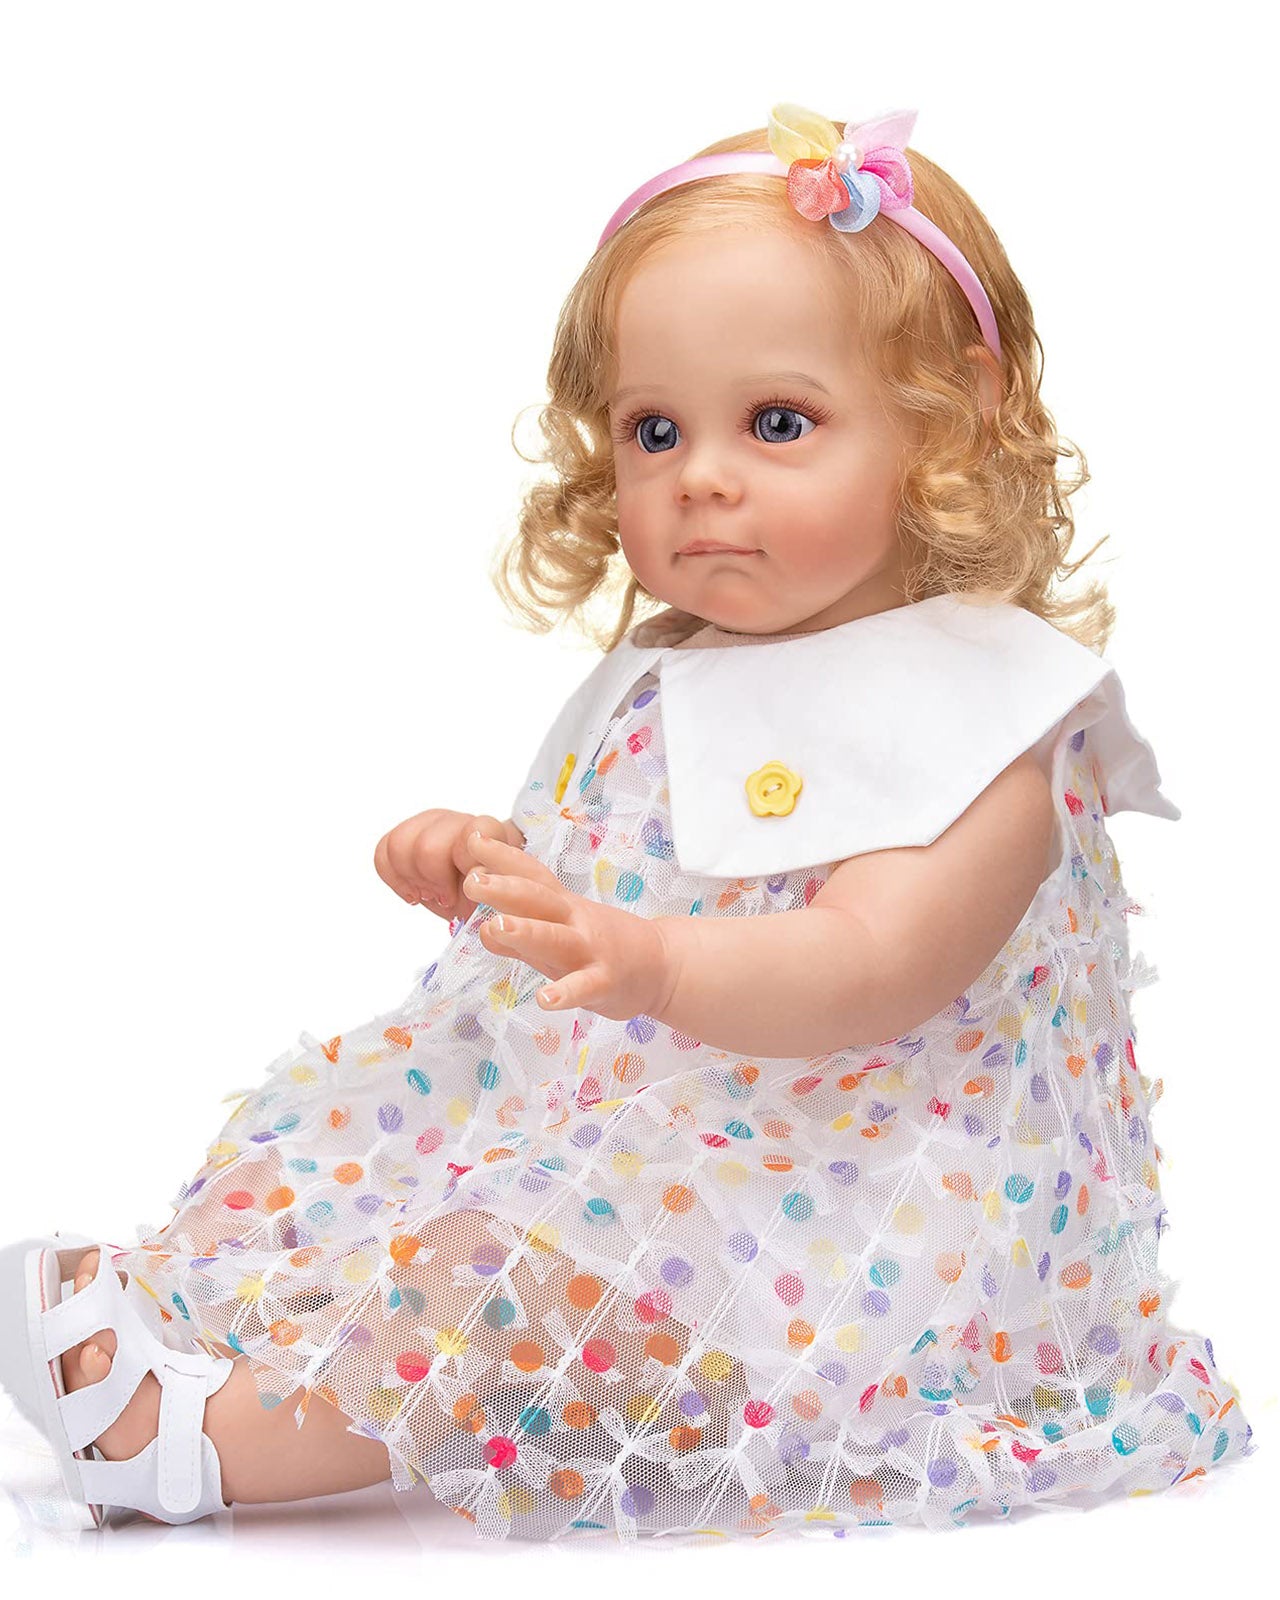 Sandie - 22" Reborn Baby Dolls Cherubic Toddlers Girl With Innocent Face